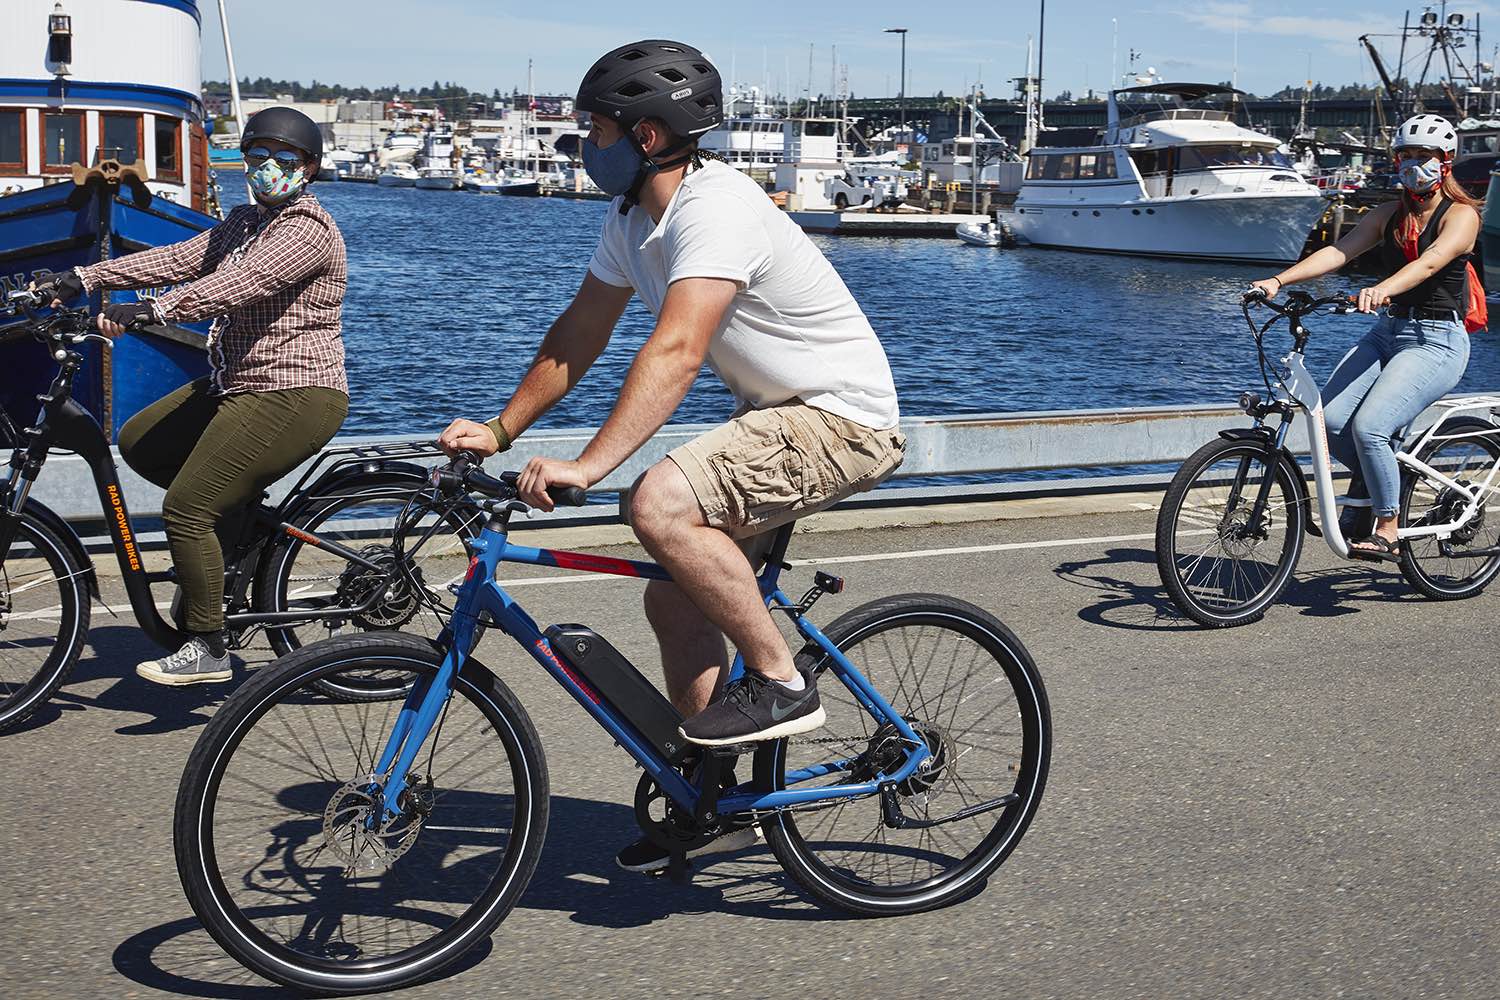 Three friends ride their electric bikes along the boardwalk.